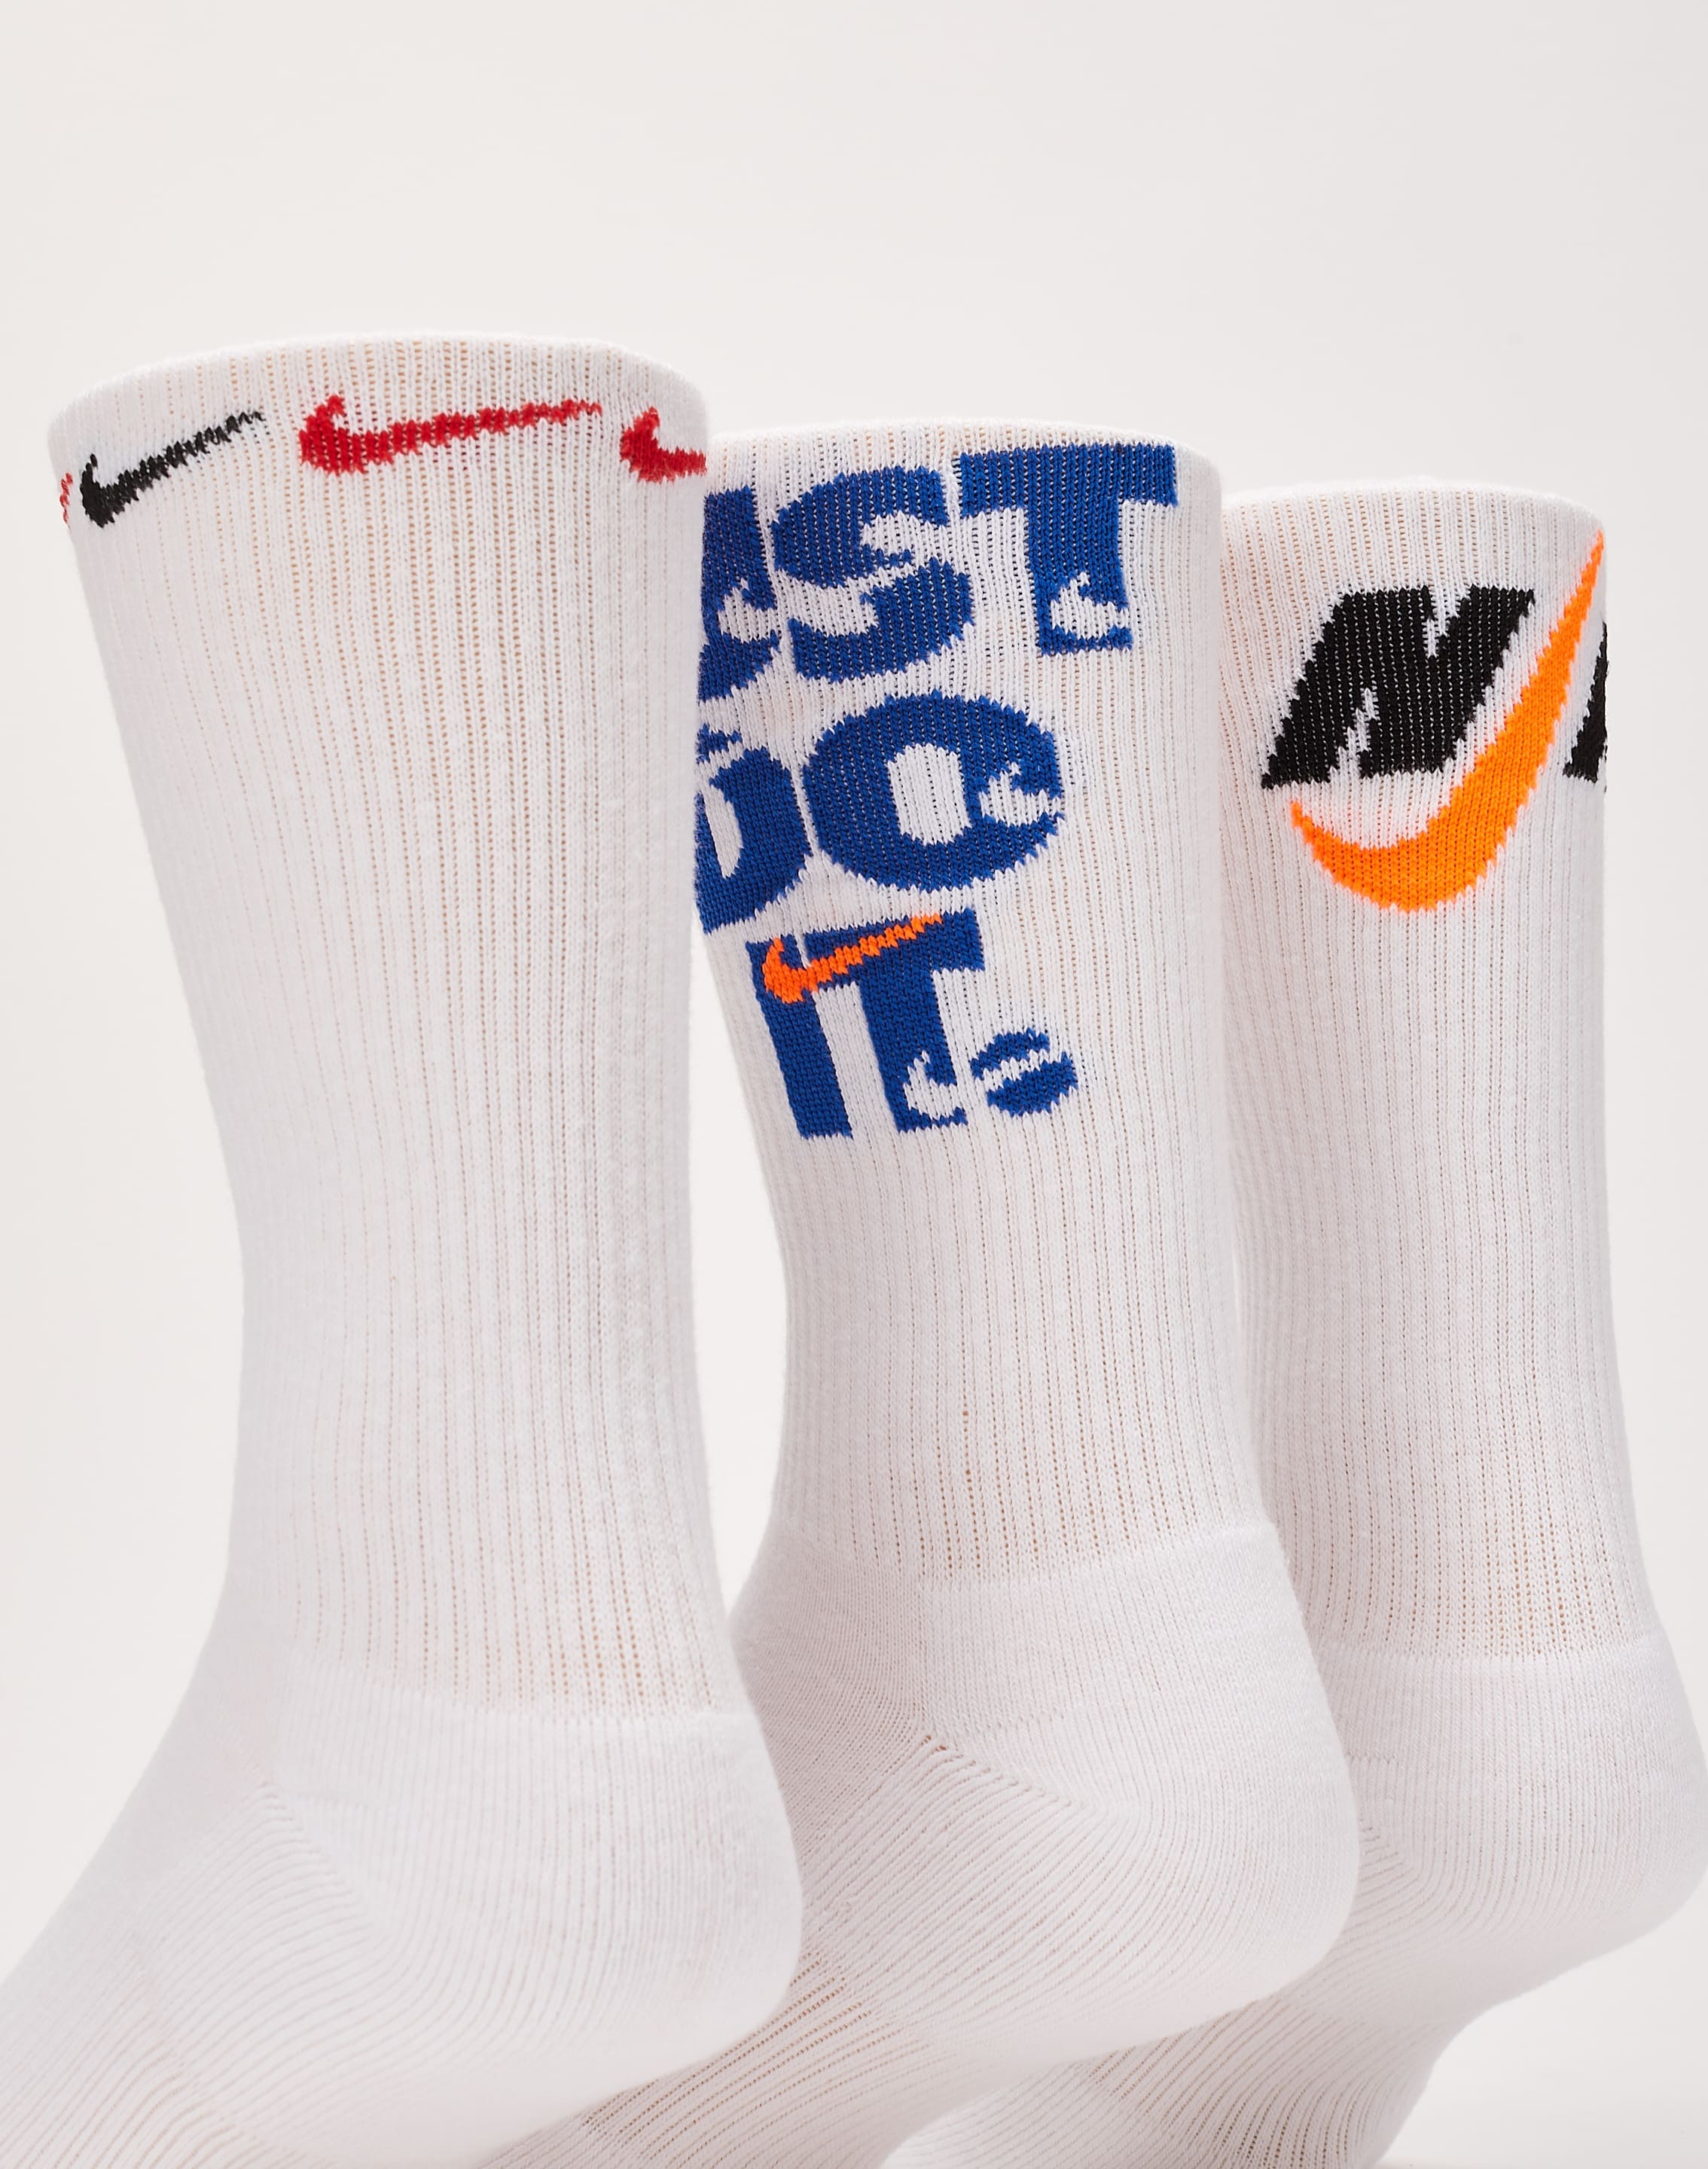 Nike Everyday Plus Cushioned 3-Pack Crew Socks